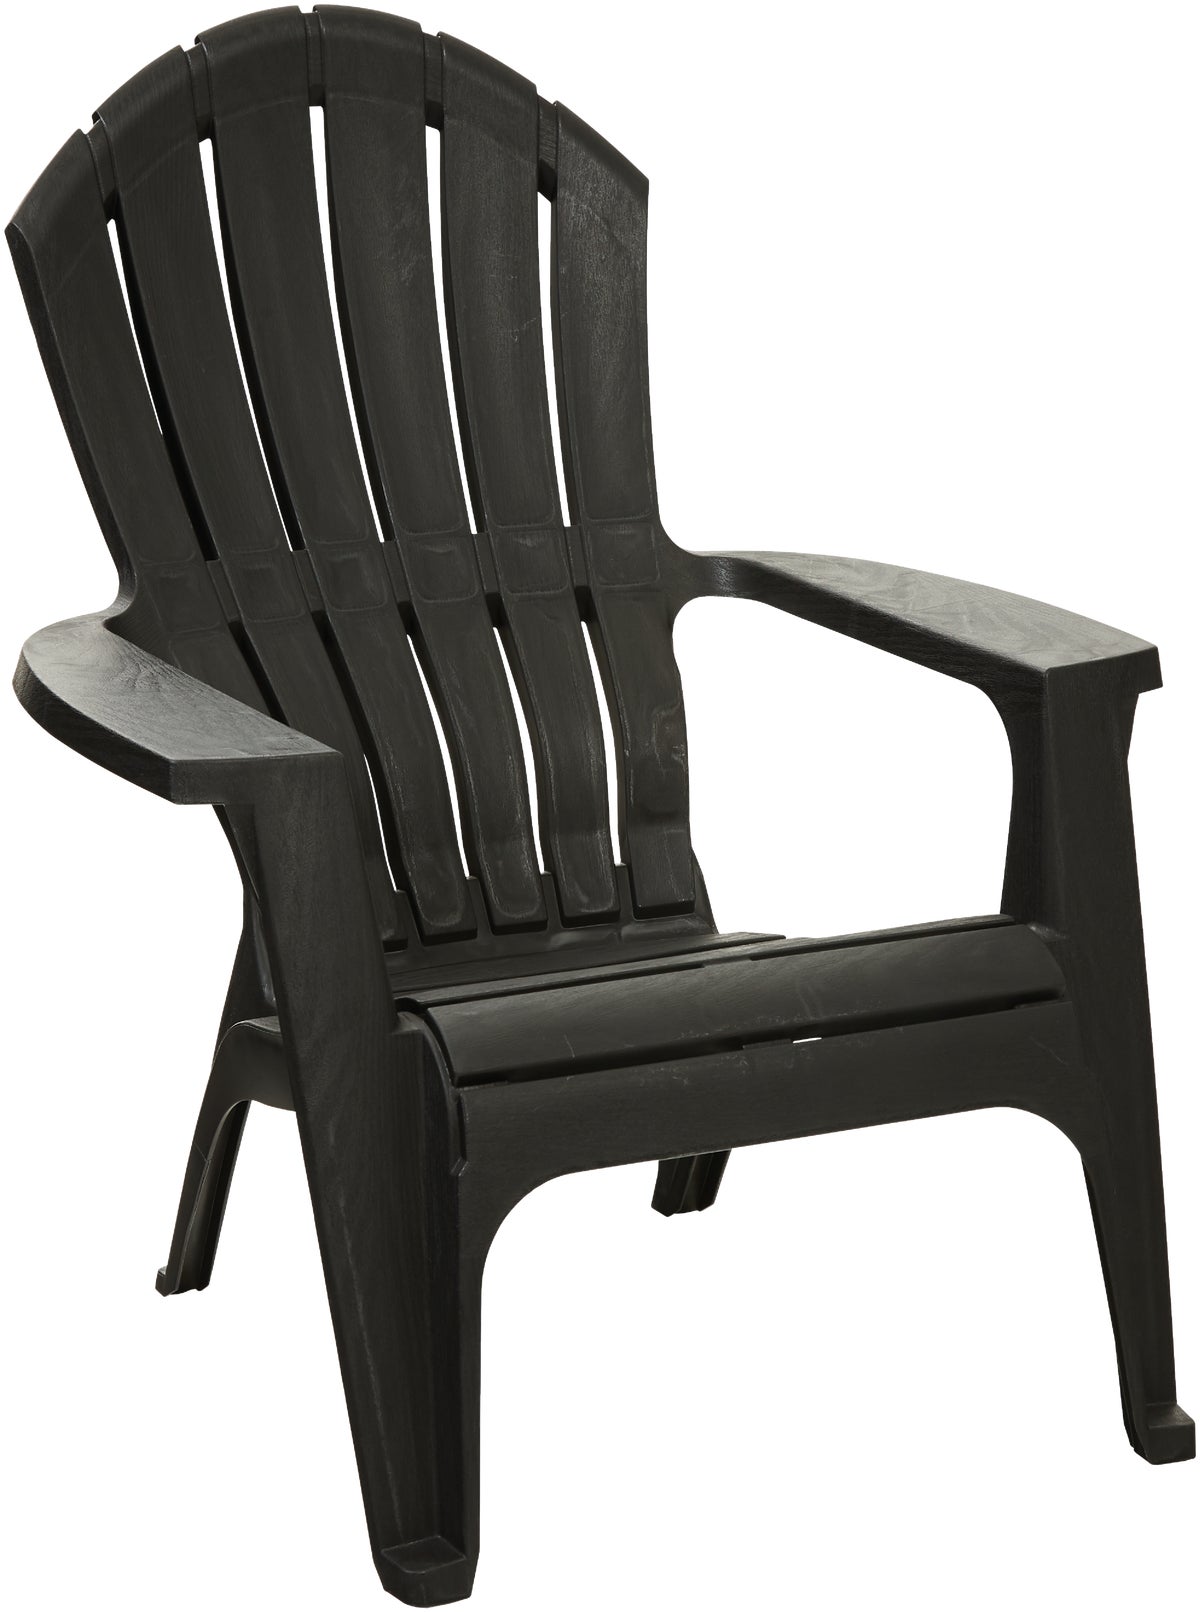 Buy Adams Ergonomic Adirondack Chair Black